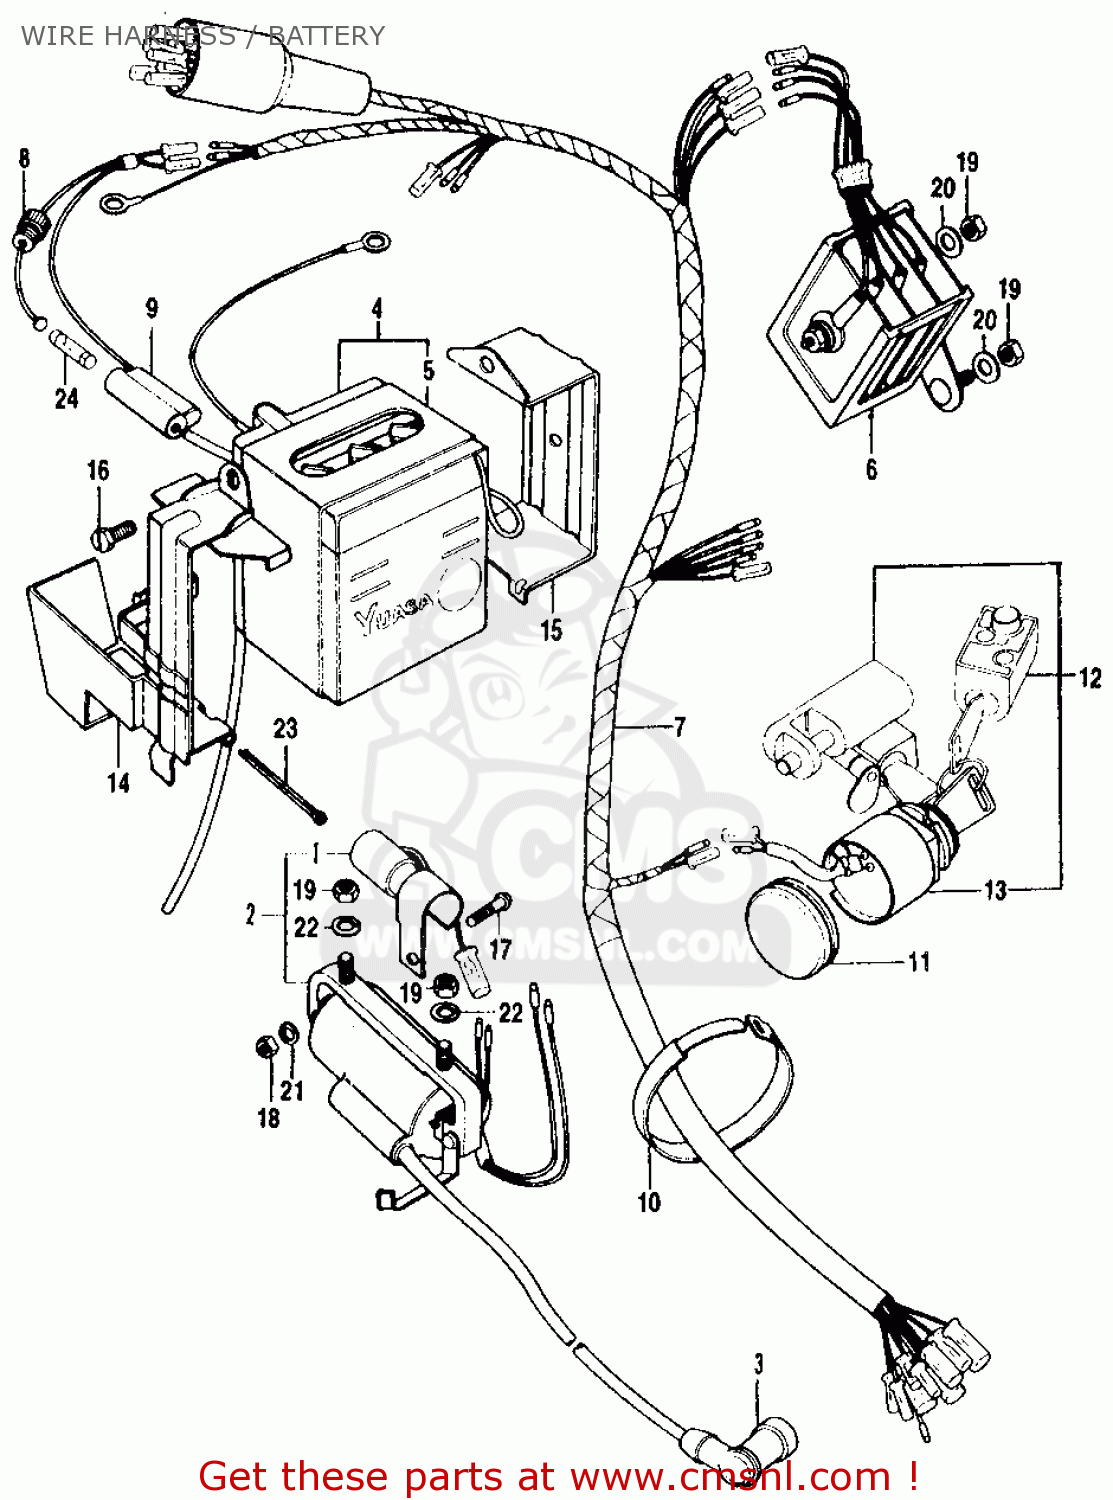 1967 Honda trail 90 ignition wiring #2